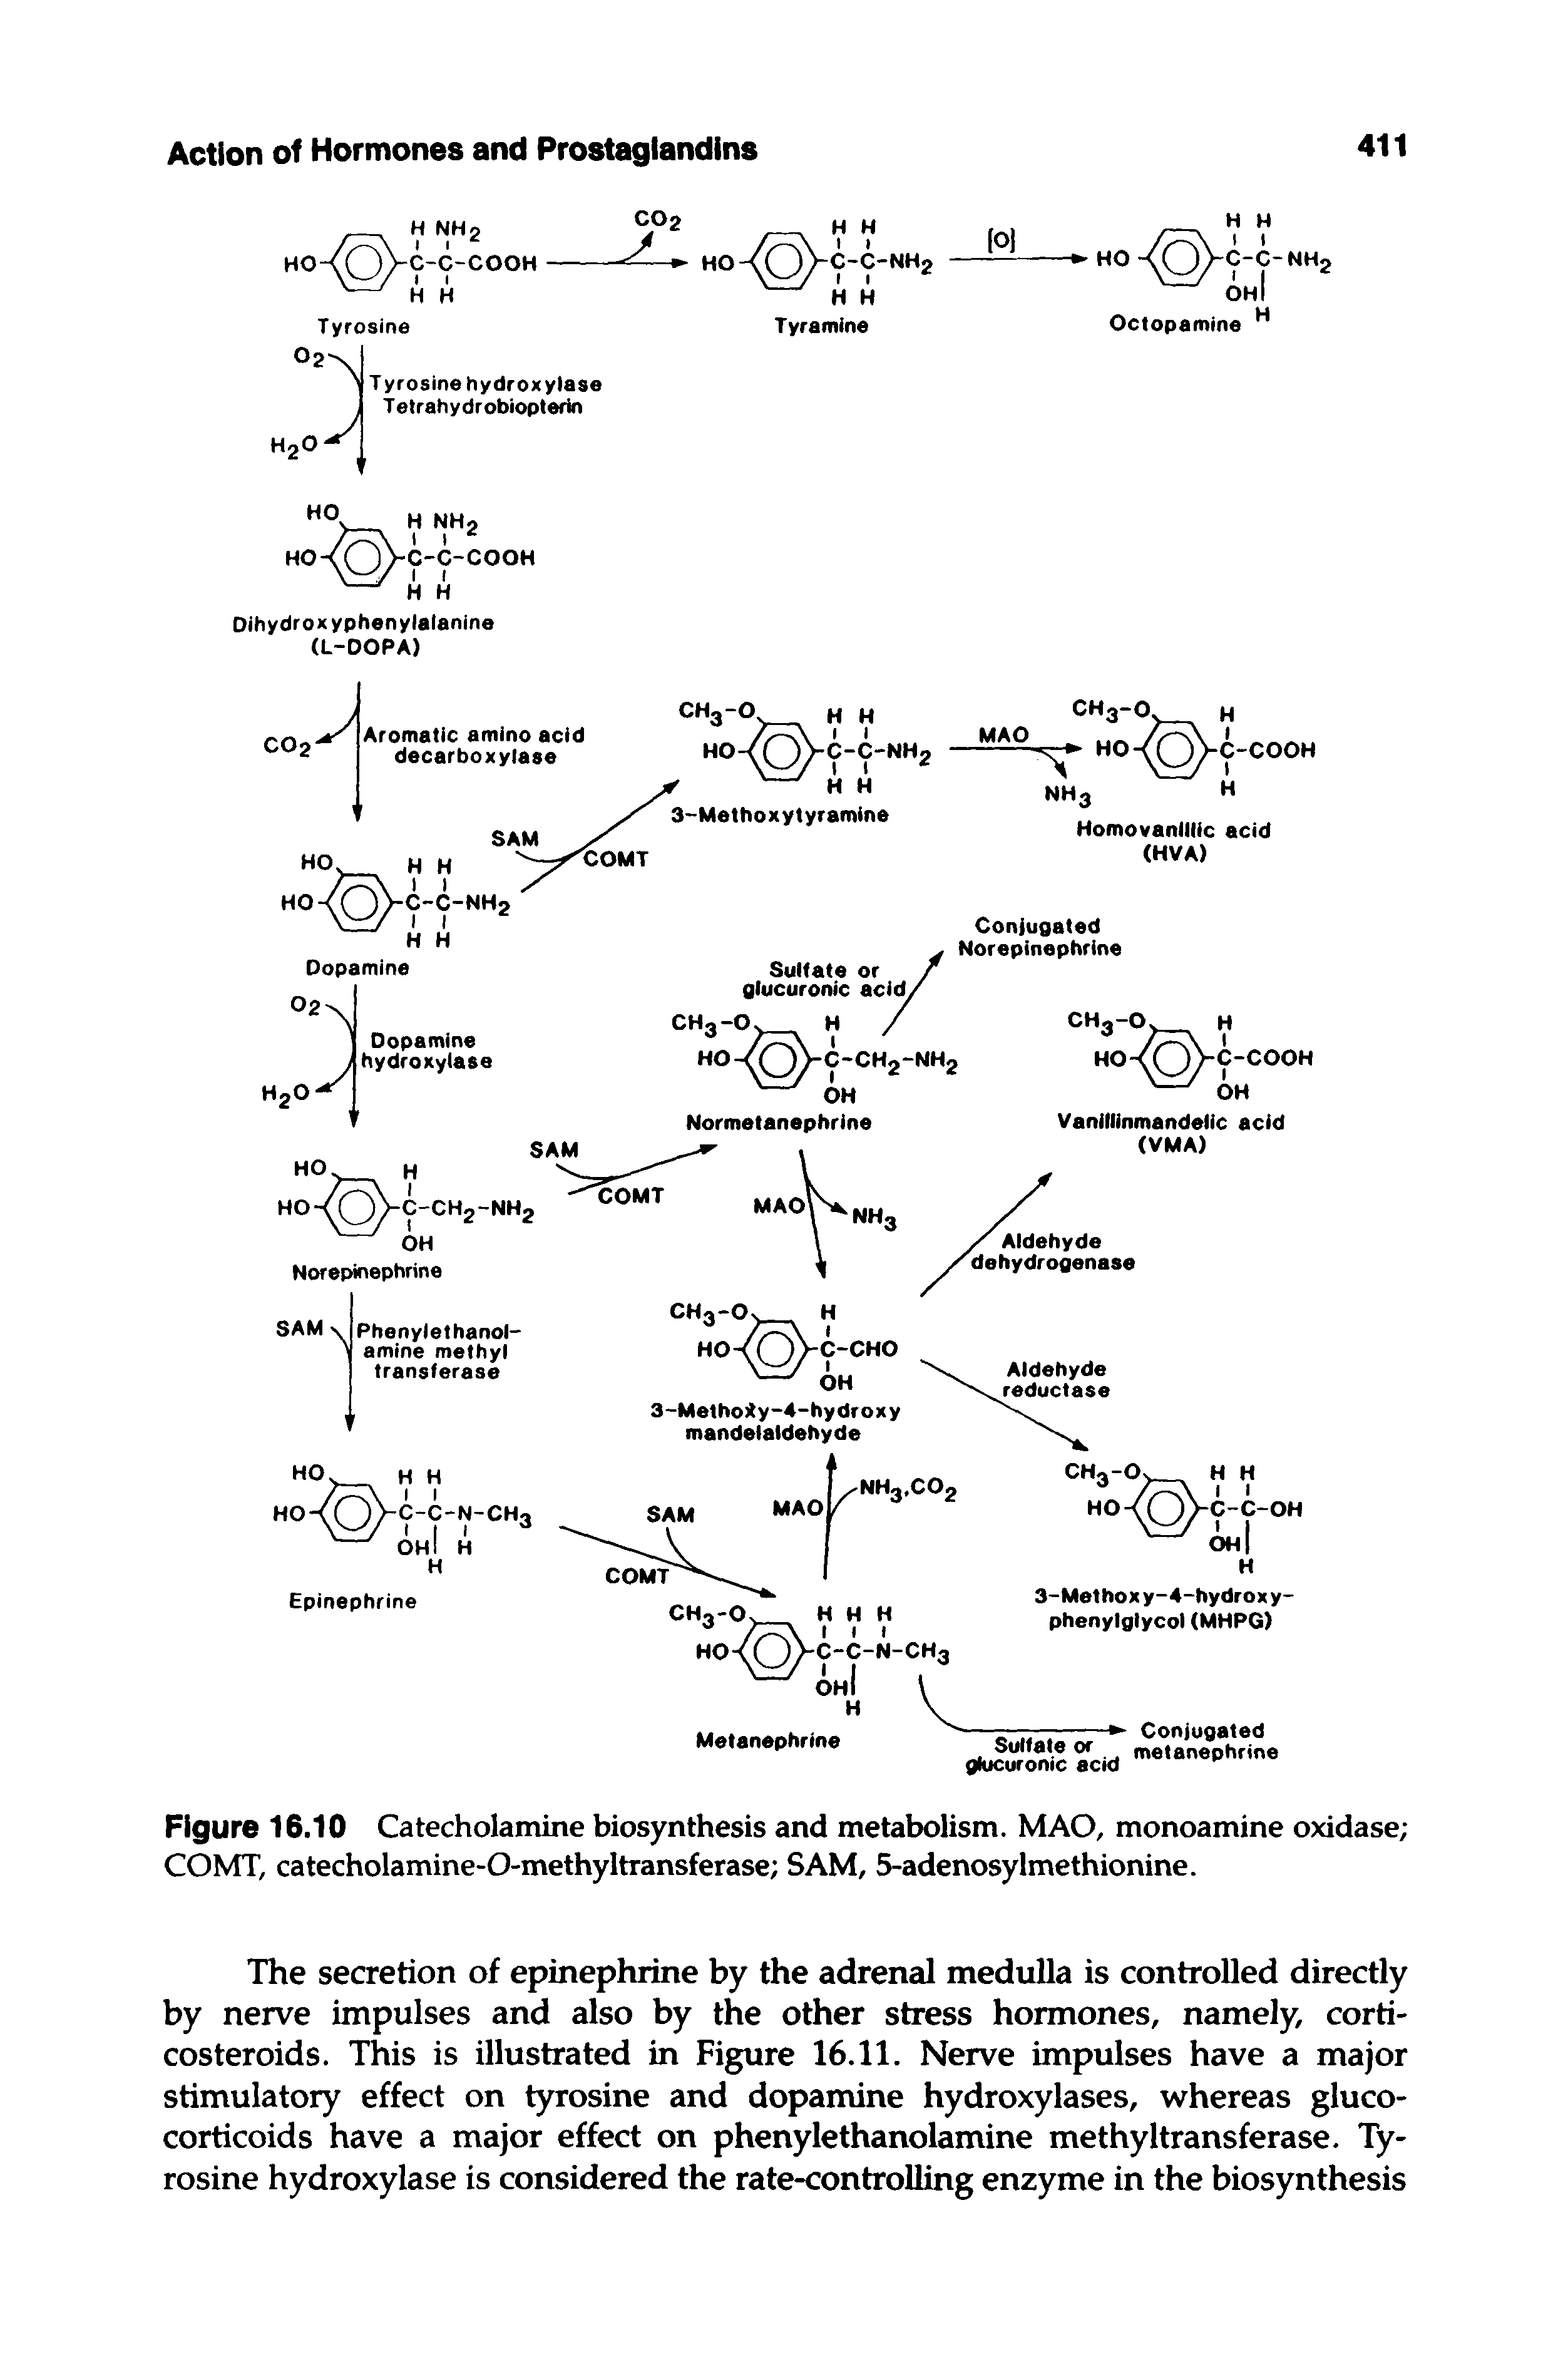 Figure 16.10 Catecholamine biosynthesis and metabolism. MAO, monoamine oxidase COMT, catecholamine-O-methyltransferase SAM, 5-adenosylmethionine.